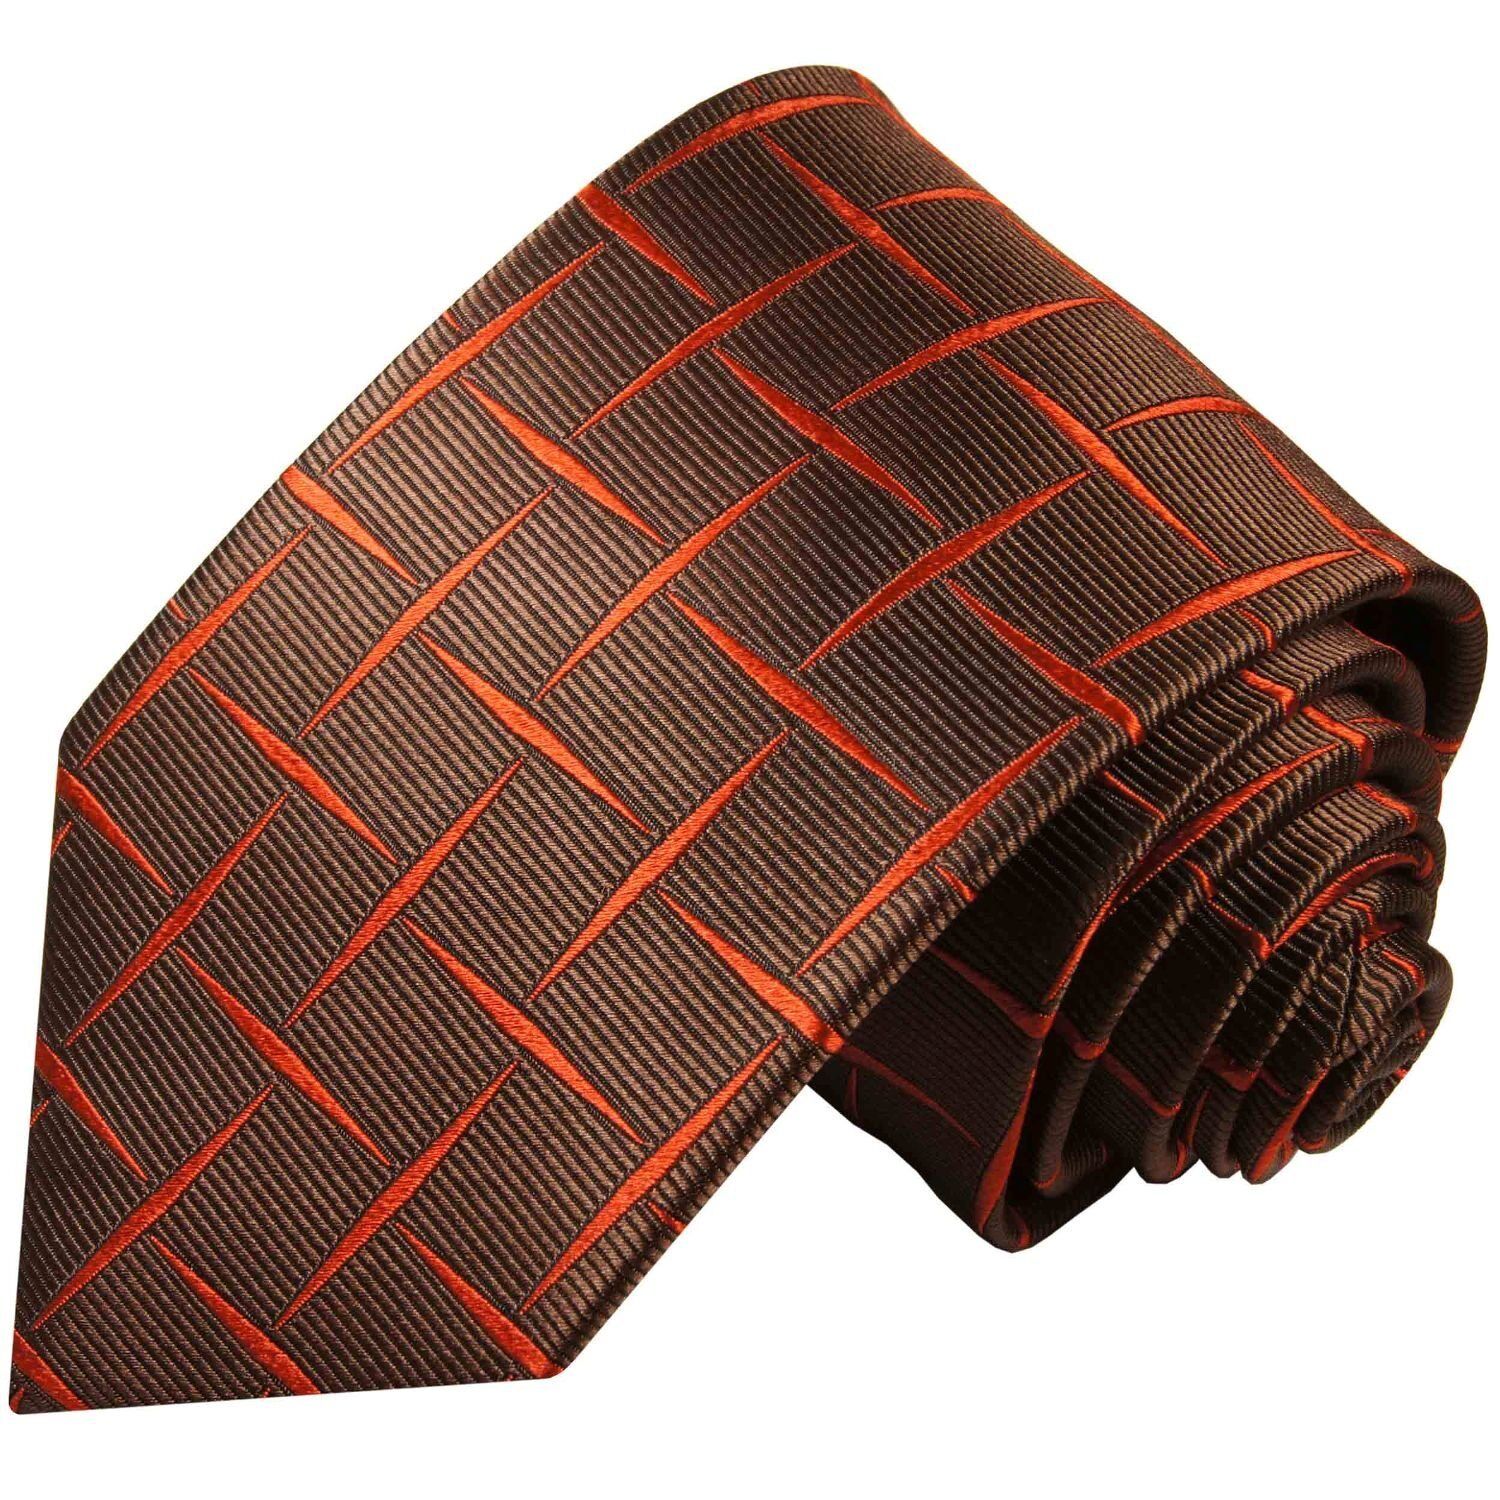 Paul Malone Krawatte »Designer Seidenkrawatte Herren Schlips modern kariert 100% Seide« Schmal (6cm), rotbraun orange 412